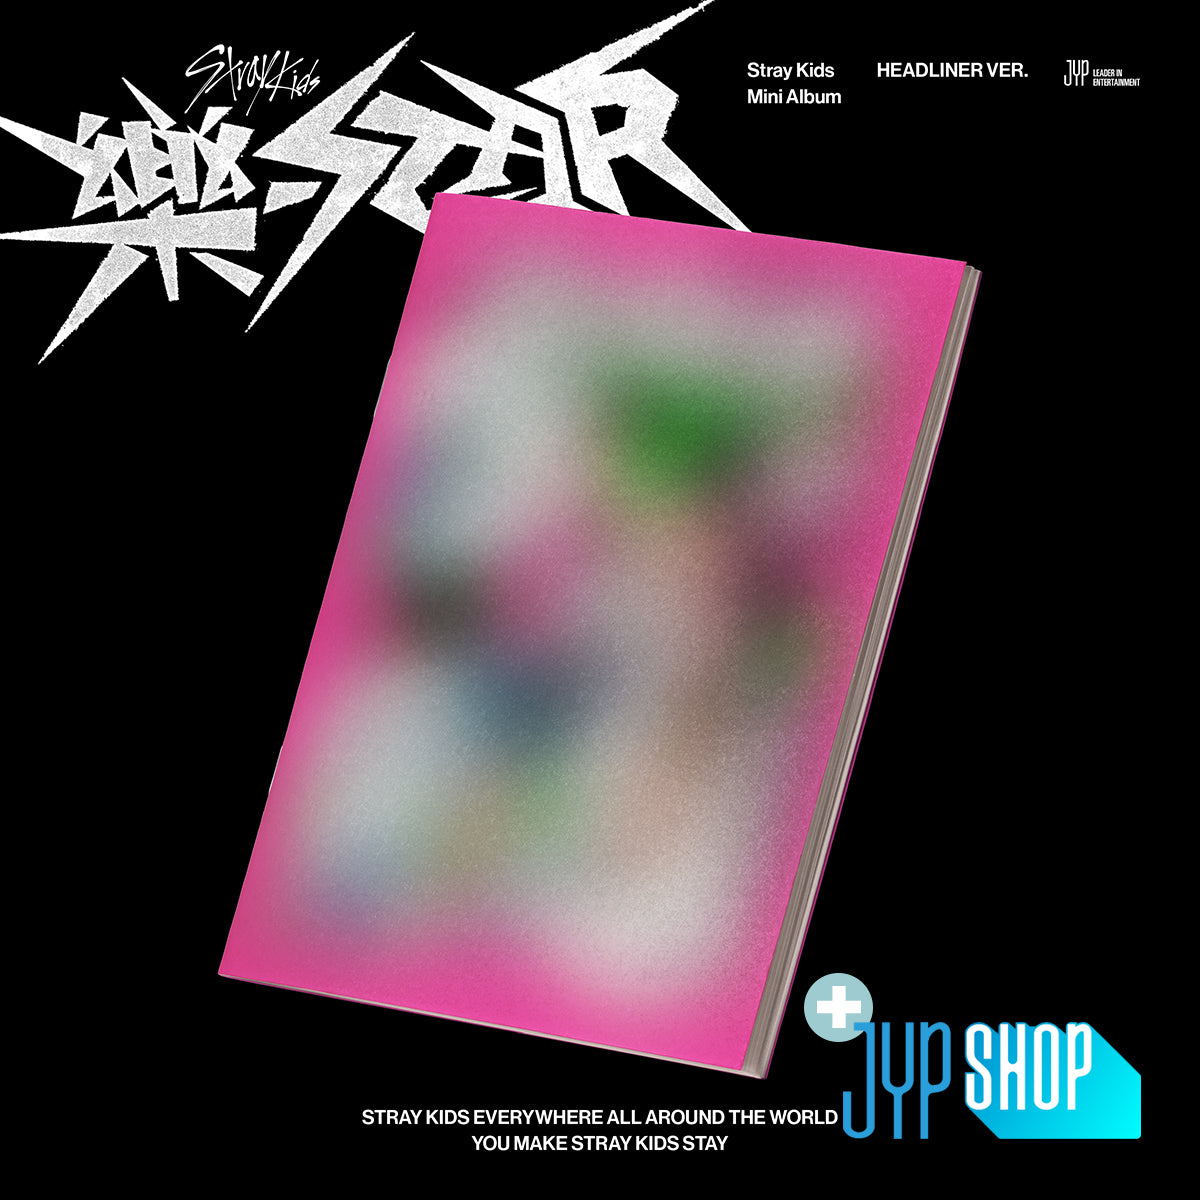 Stray Kids - 樂-STAR (ROCK-STAR) (HEADLINER ver.) + JYP SHOP P.O.B